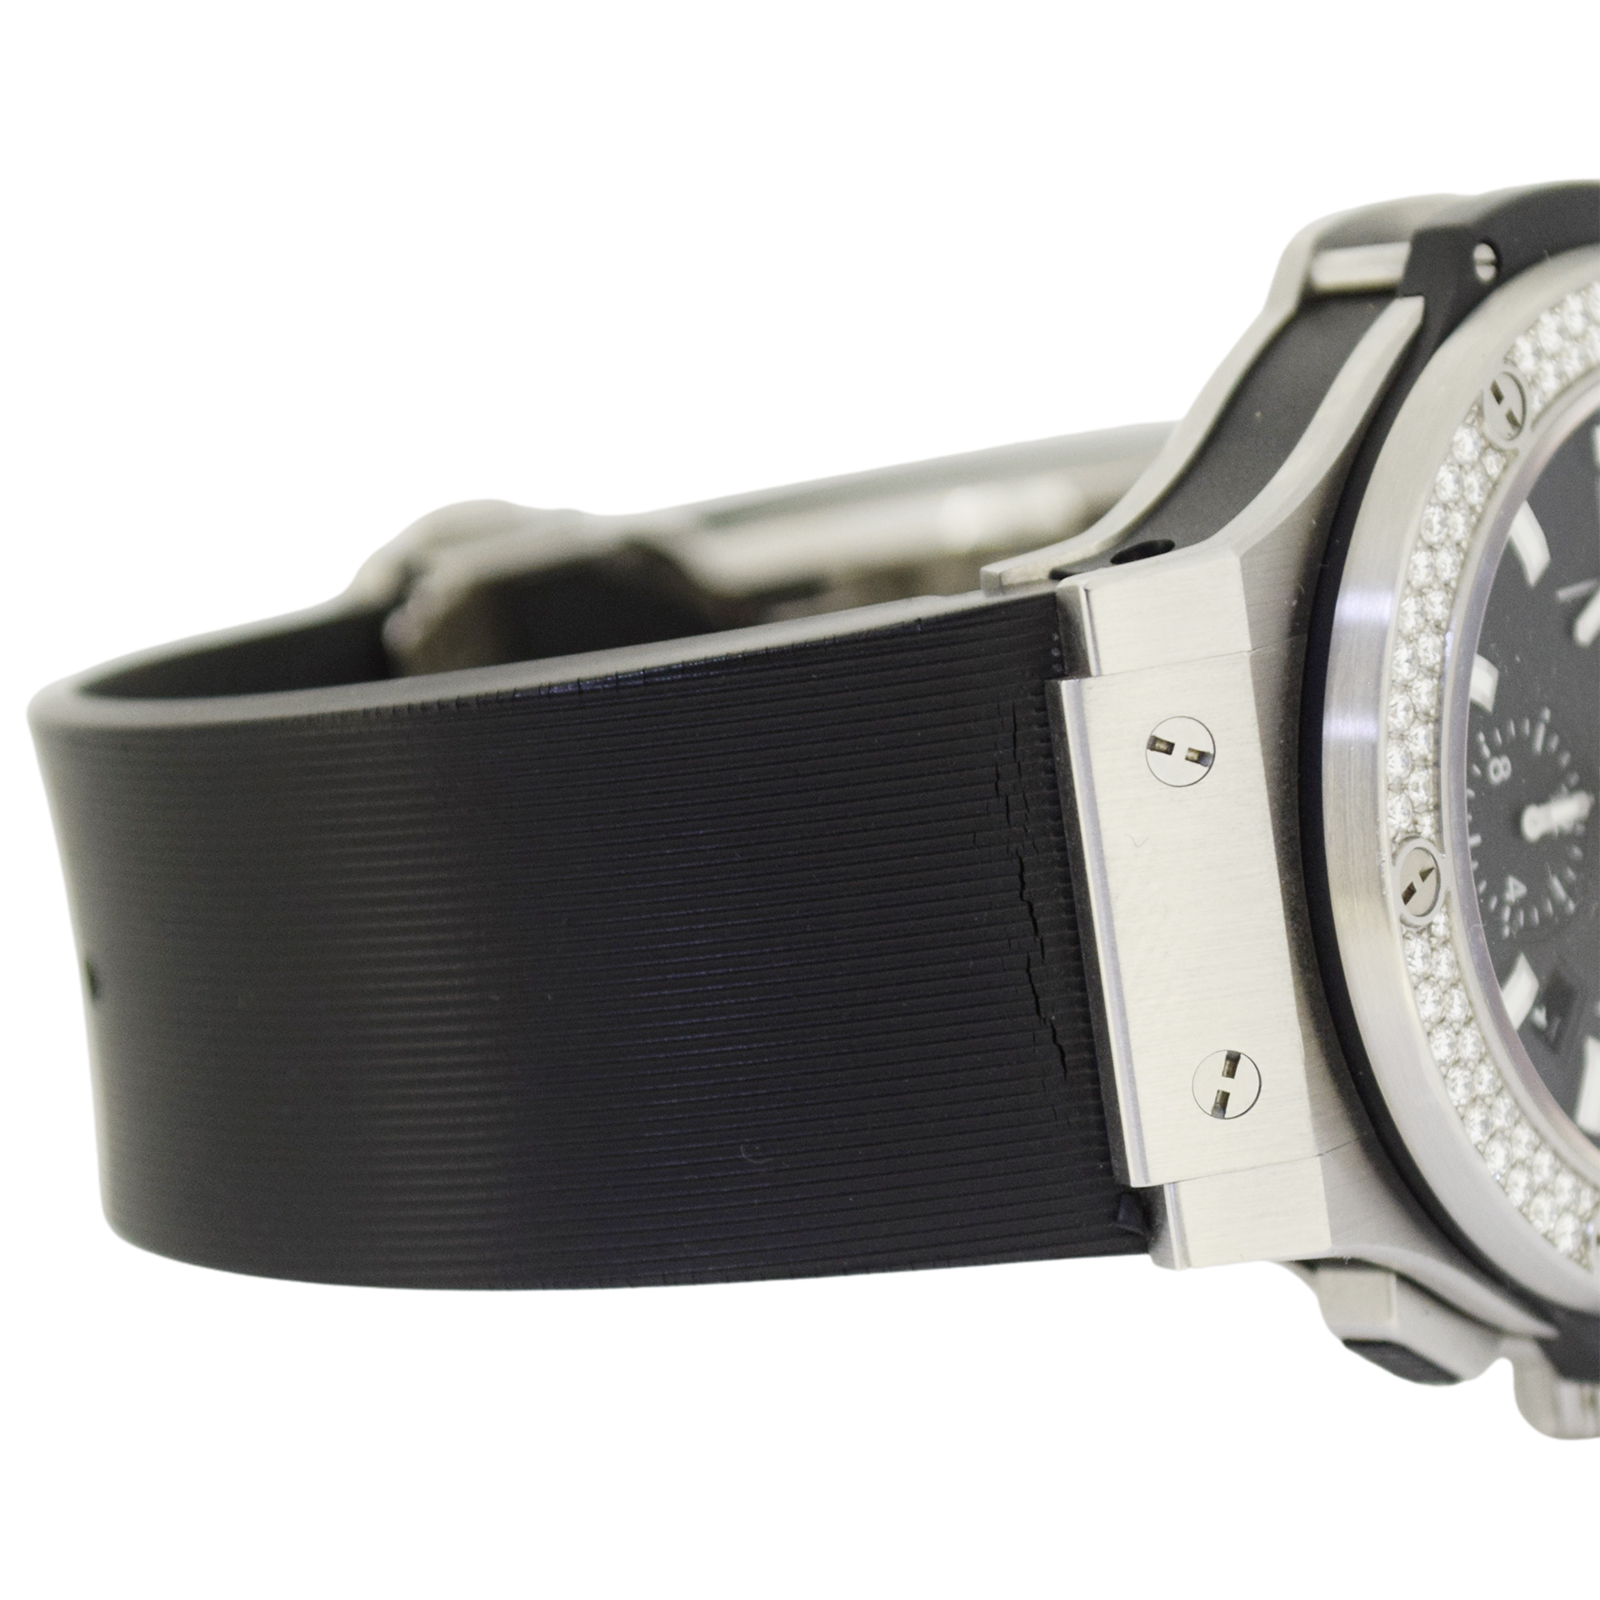 HUBLOT ウブロ  ビッグバン スチール ダイヤモンド  301.SX.1170.RX.1104  メンズ 腕時計